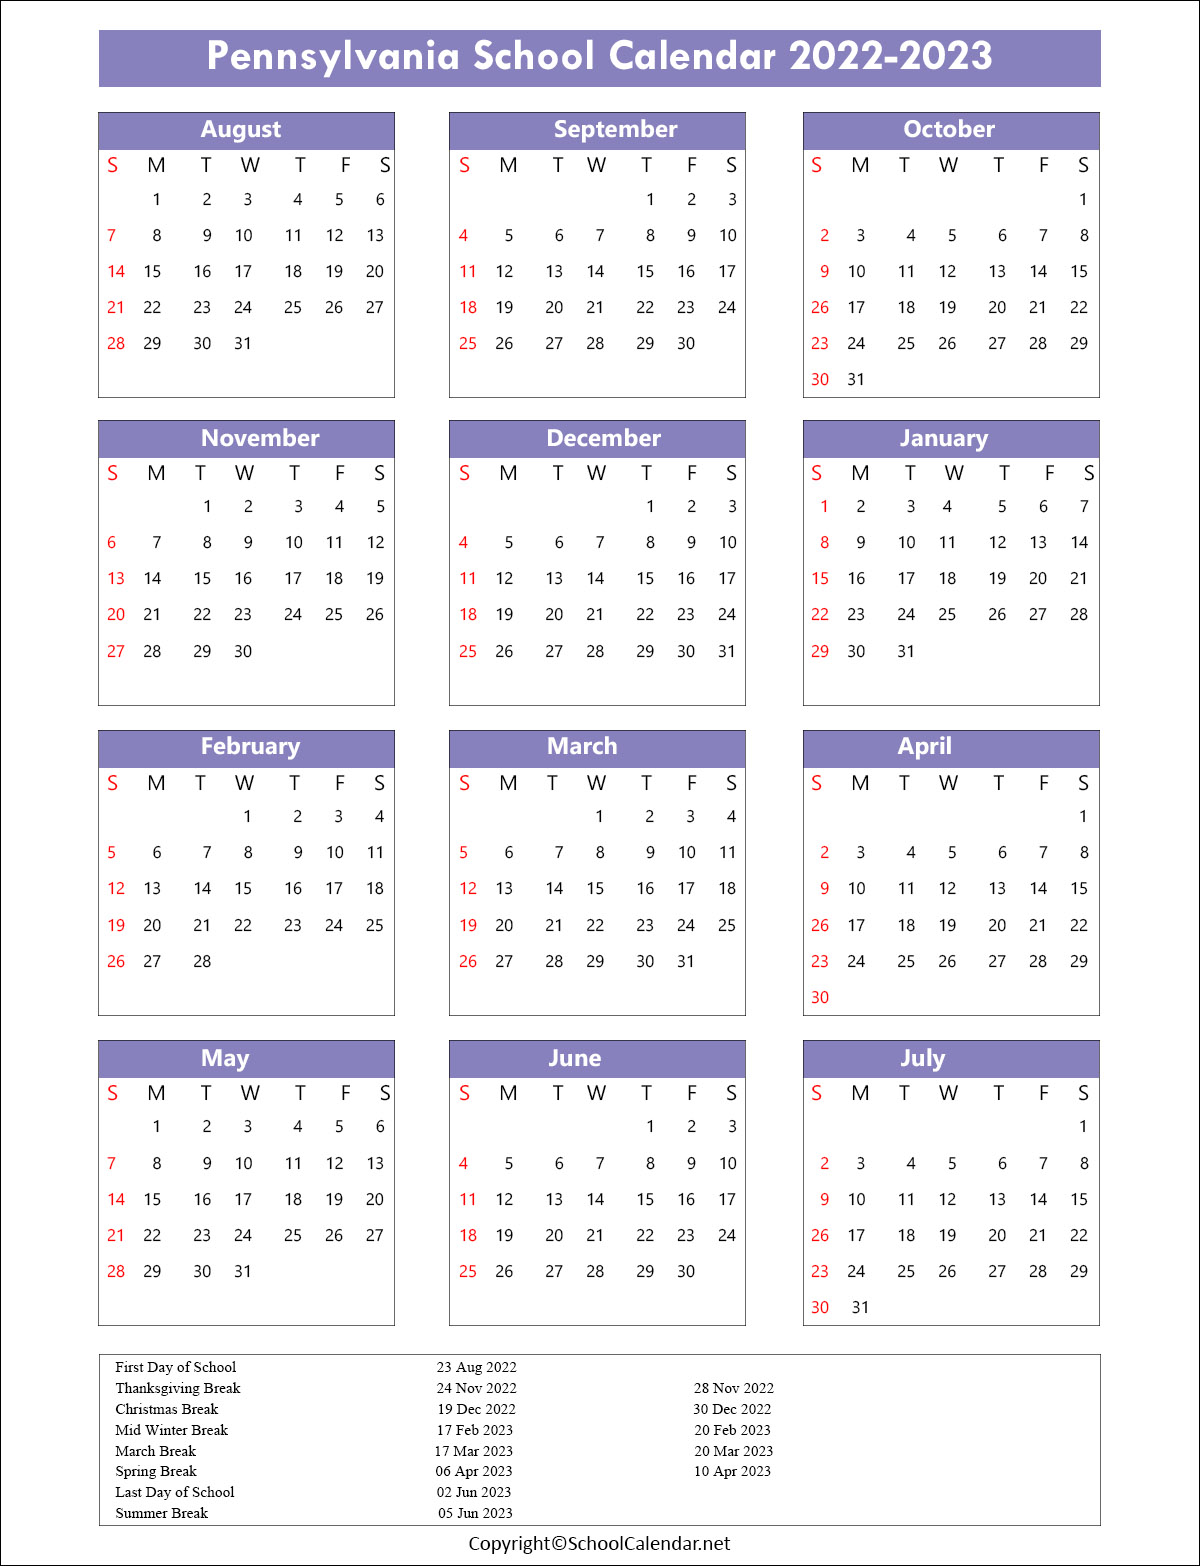 Pennsylvania School Calendar 2022